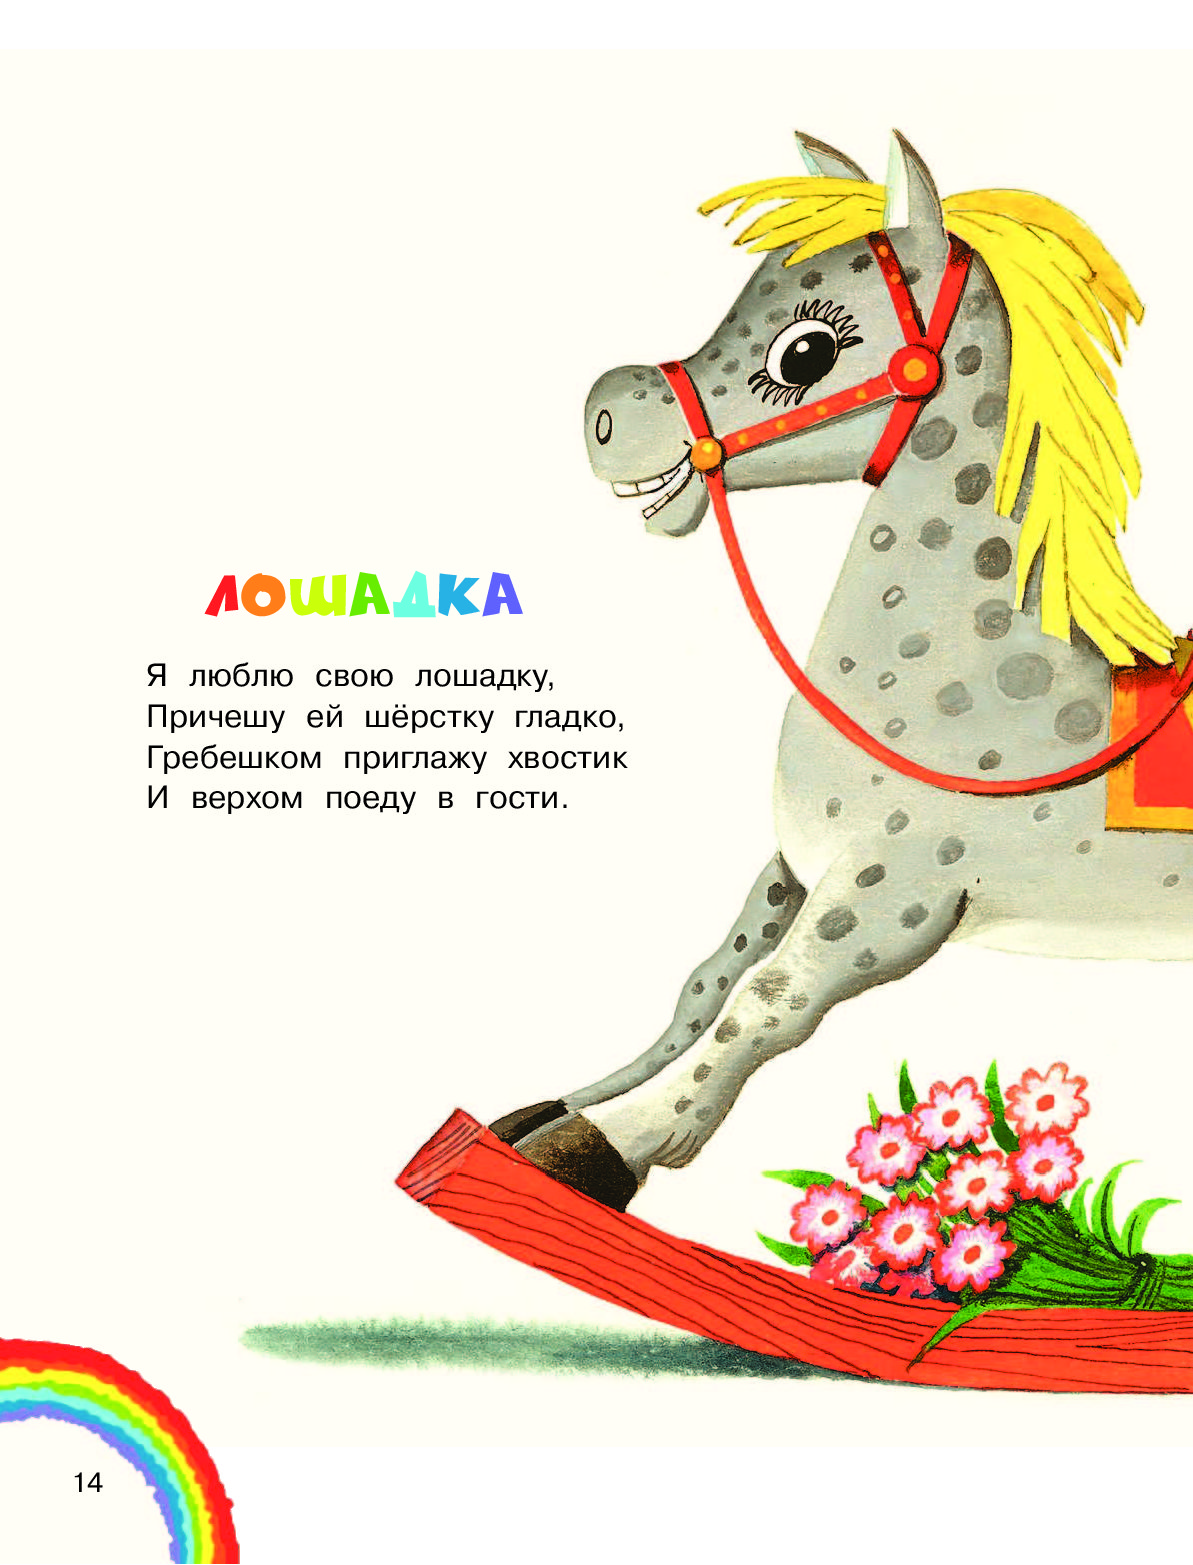 Купи коня стихотворение. Стихотворение про лошадку. Детские стихи про лошадку. Стих про лошадку для детей. Стихи про коня детские.